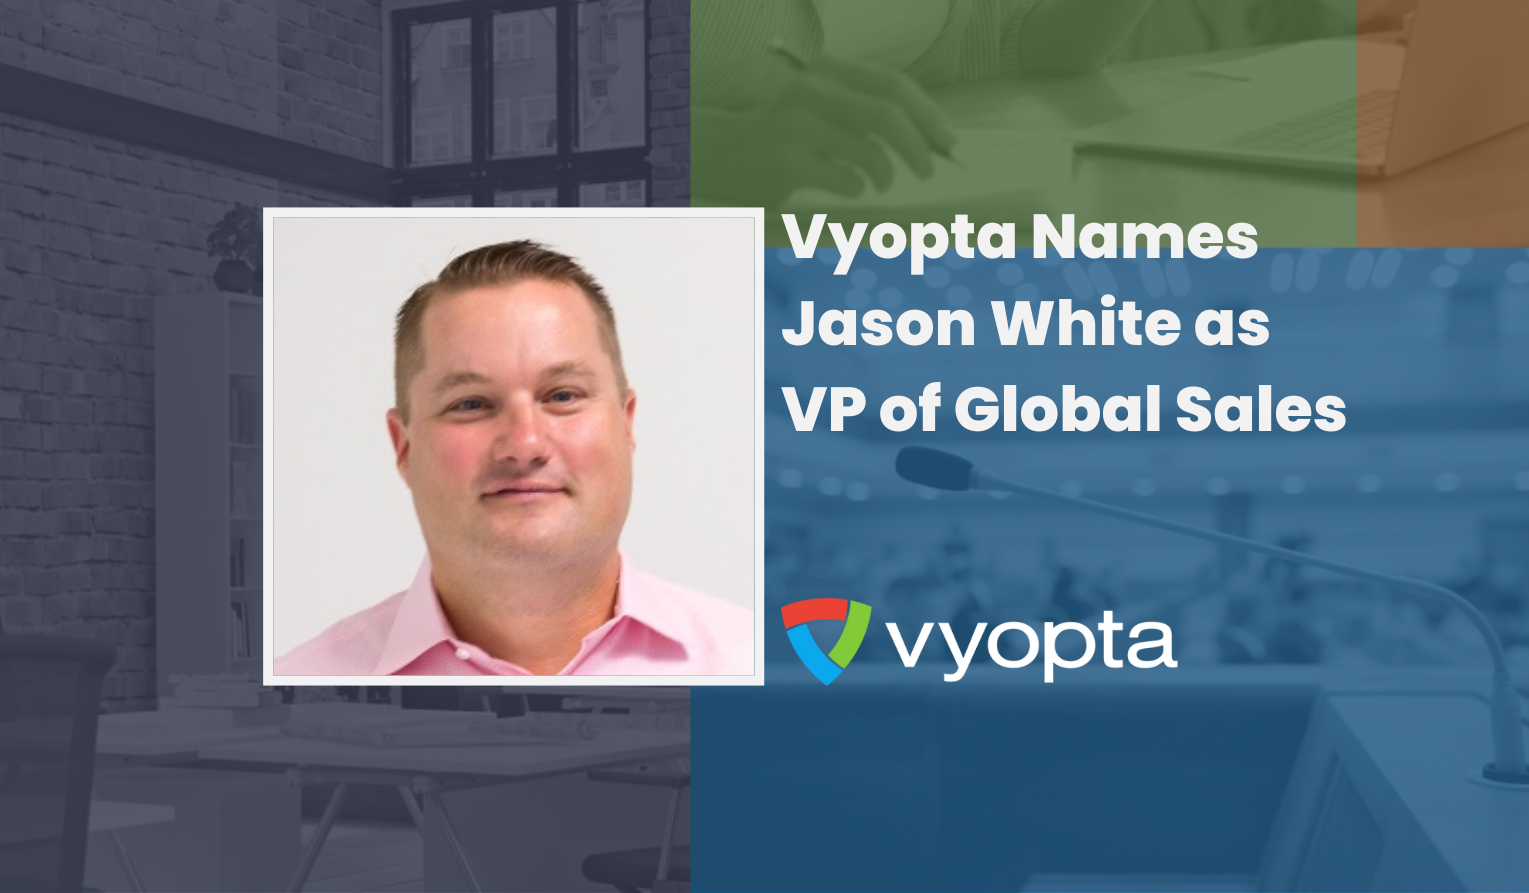 Vyopta Names Jason White as VP of Global Sales